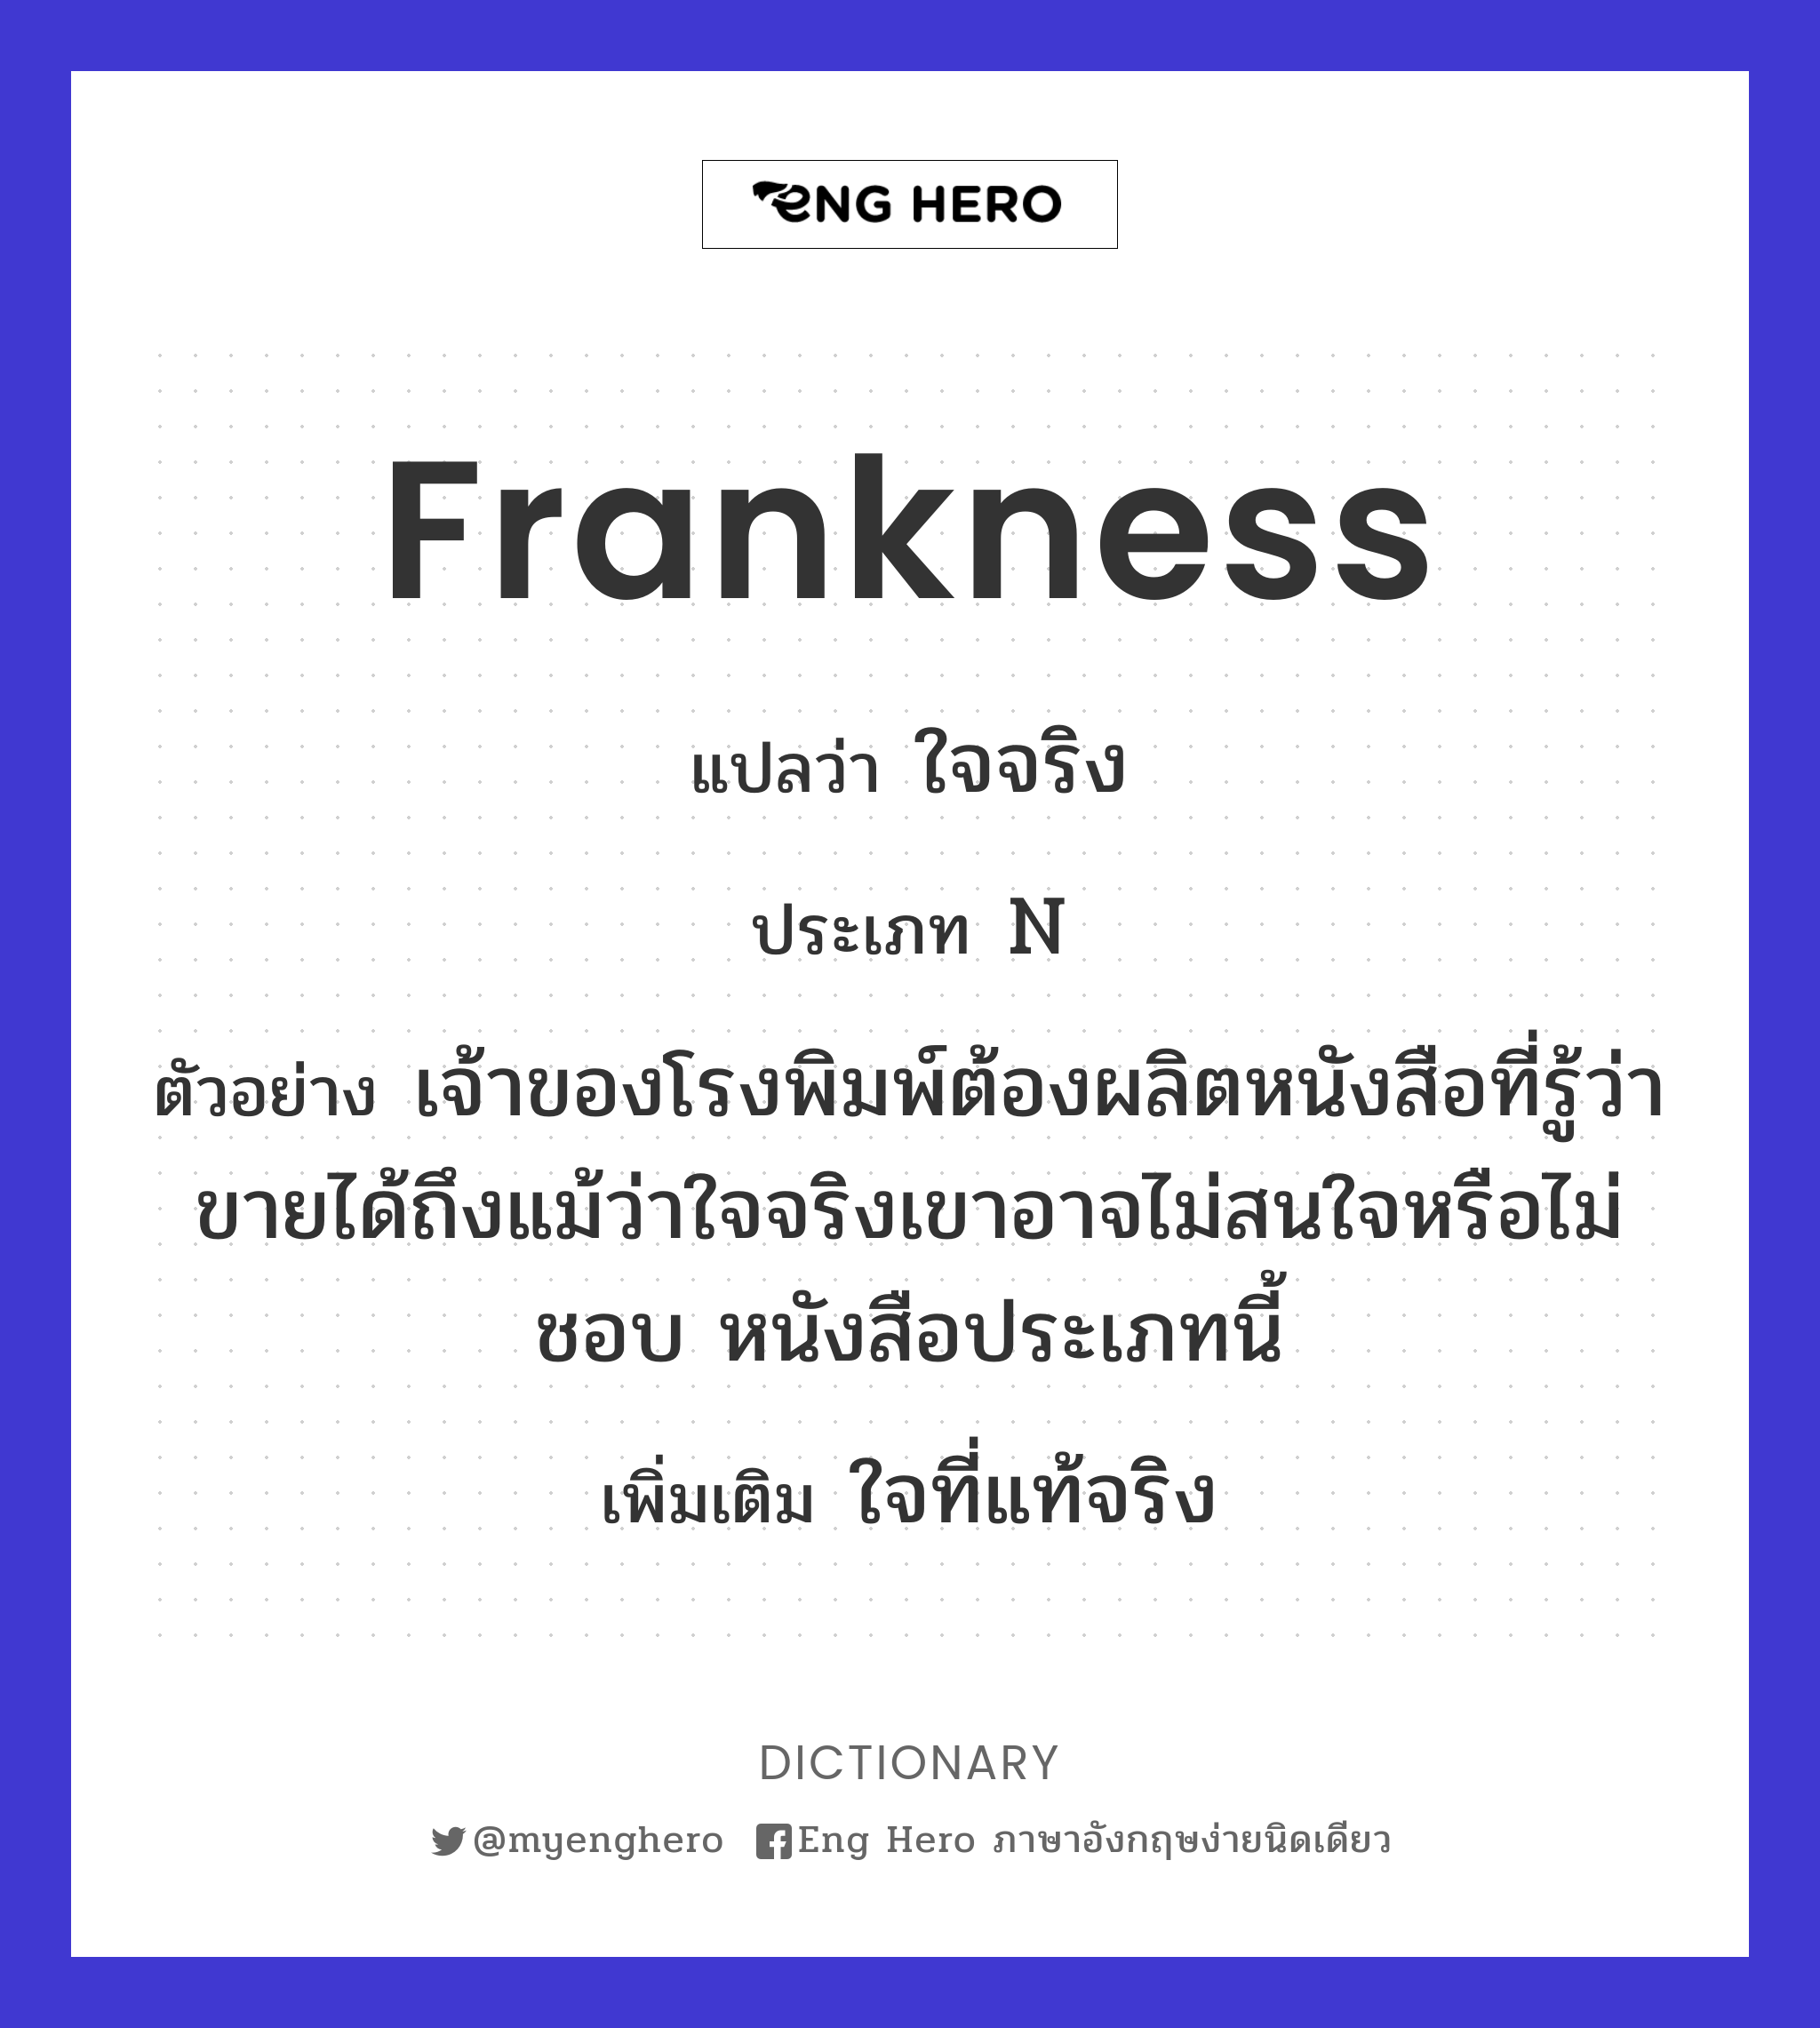 frankness